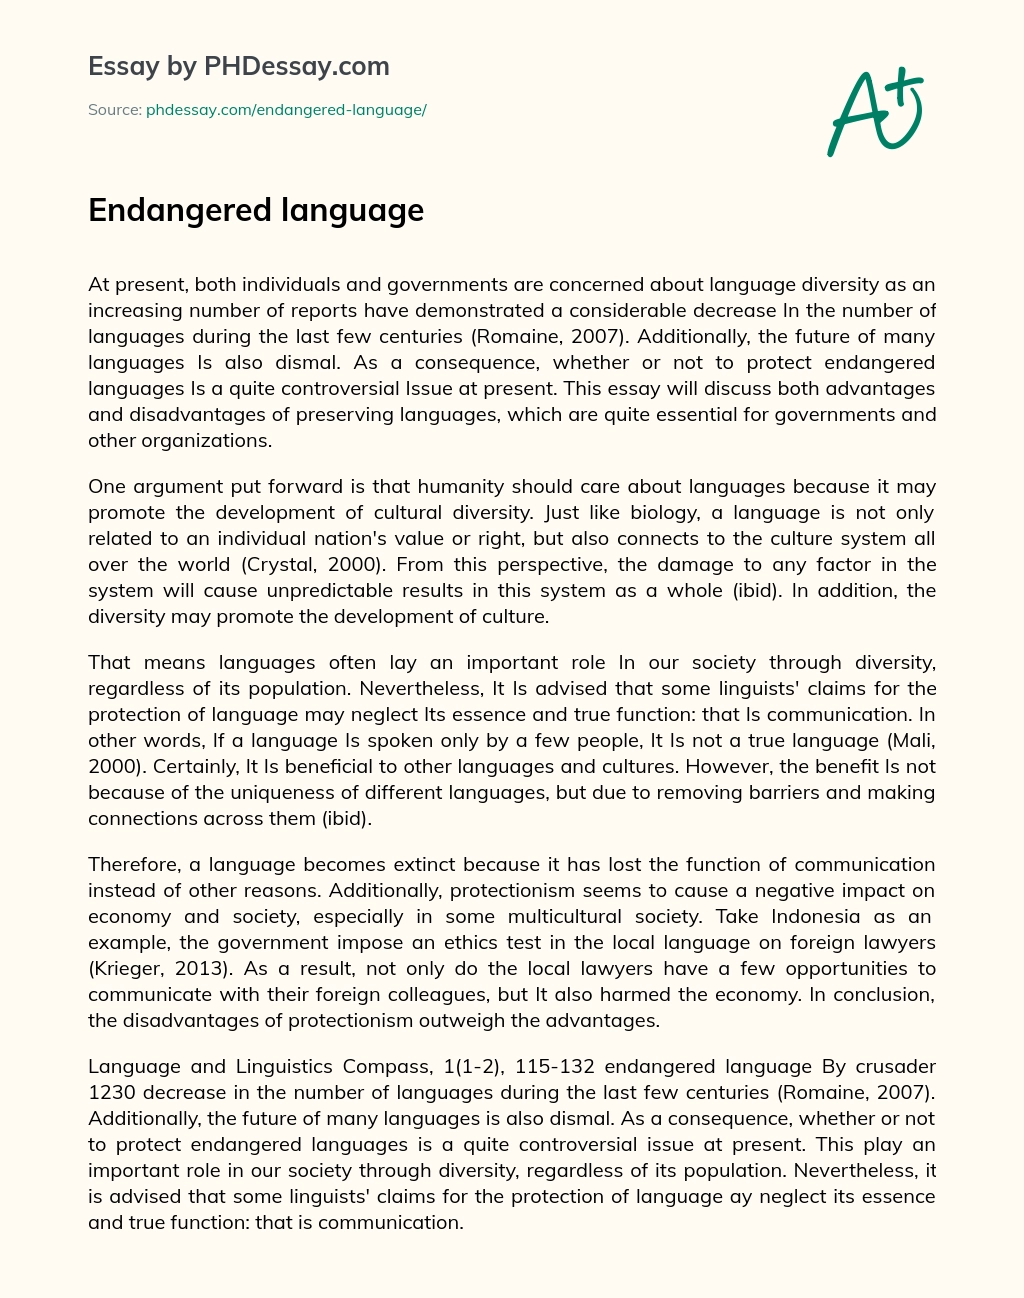 Endangered language essay